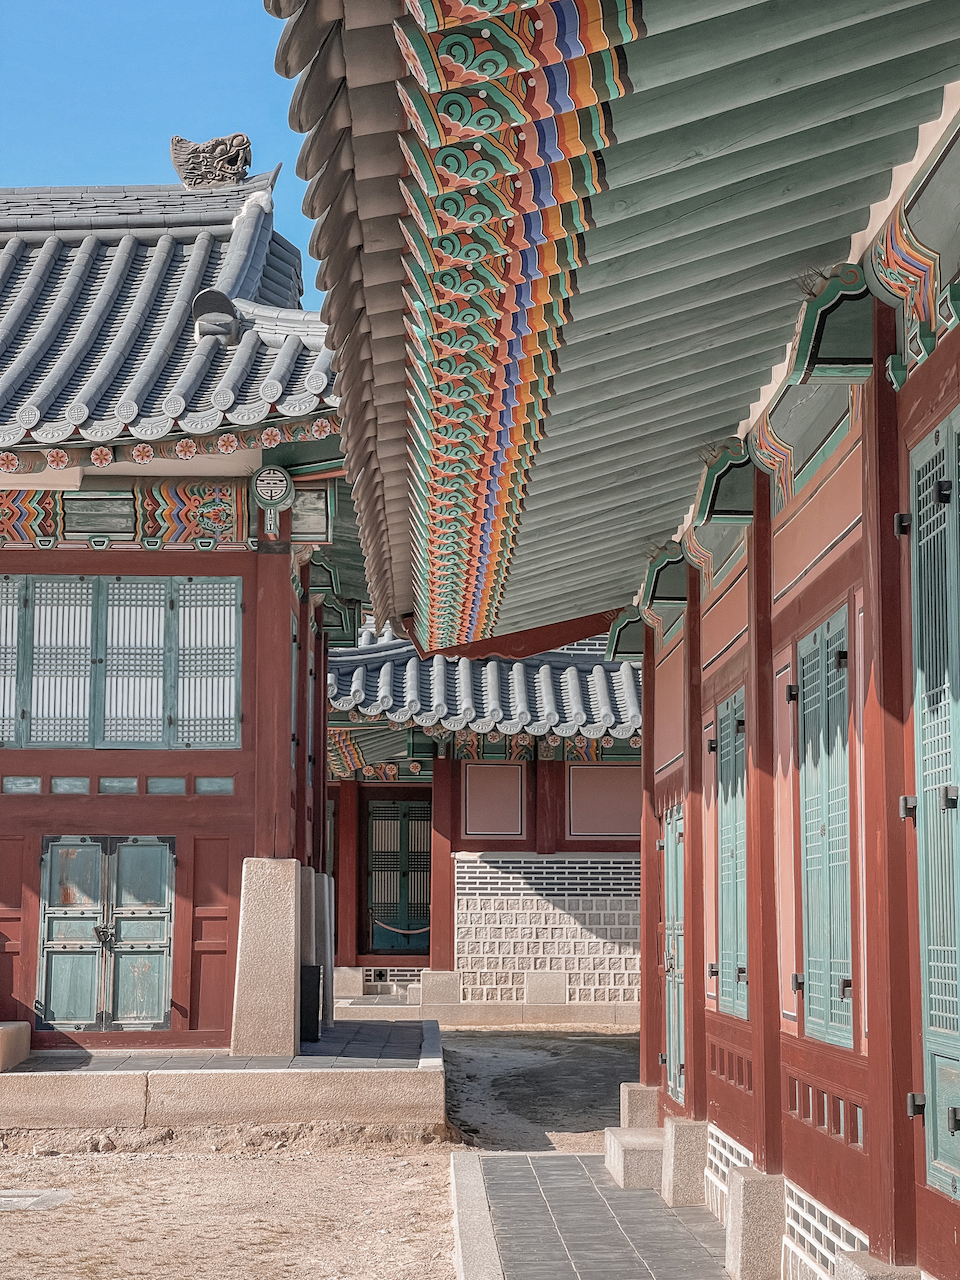 Details of the roof - Gyeongbokgung Palace - Seoul - South Korea